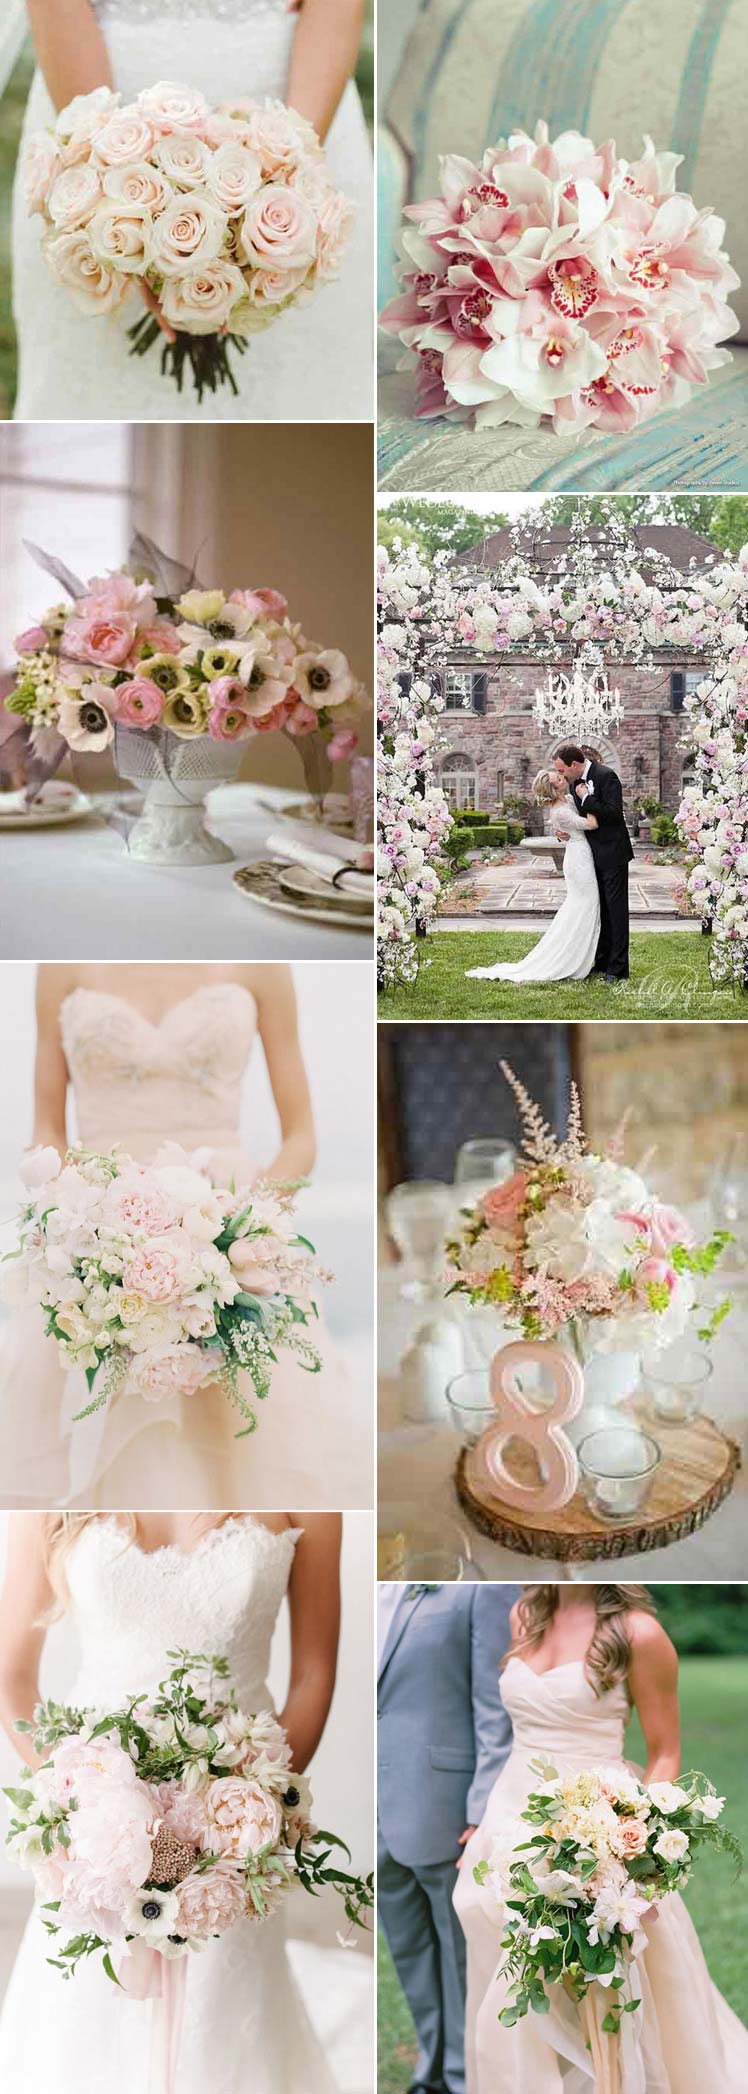 Blush wedding flower bouquet ideas